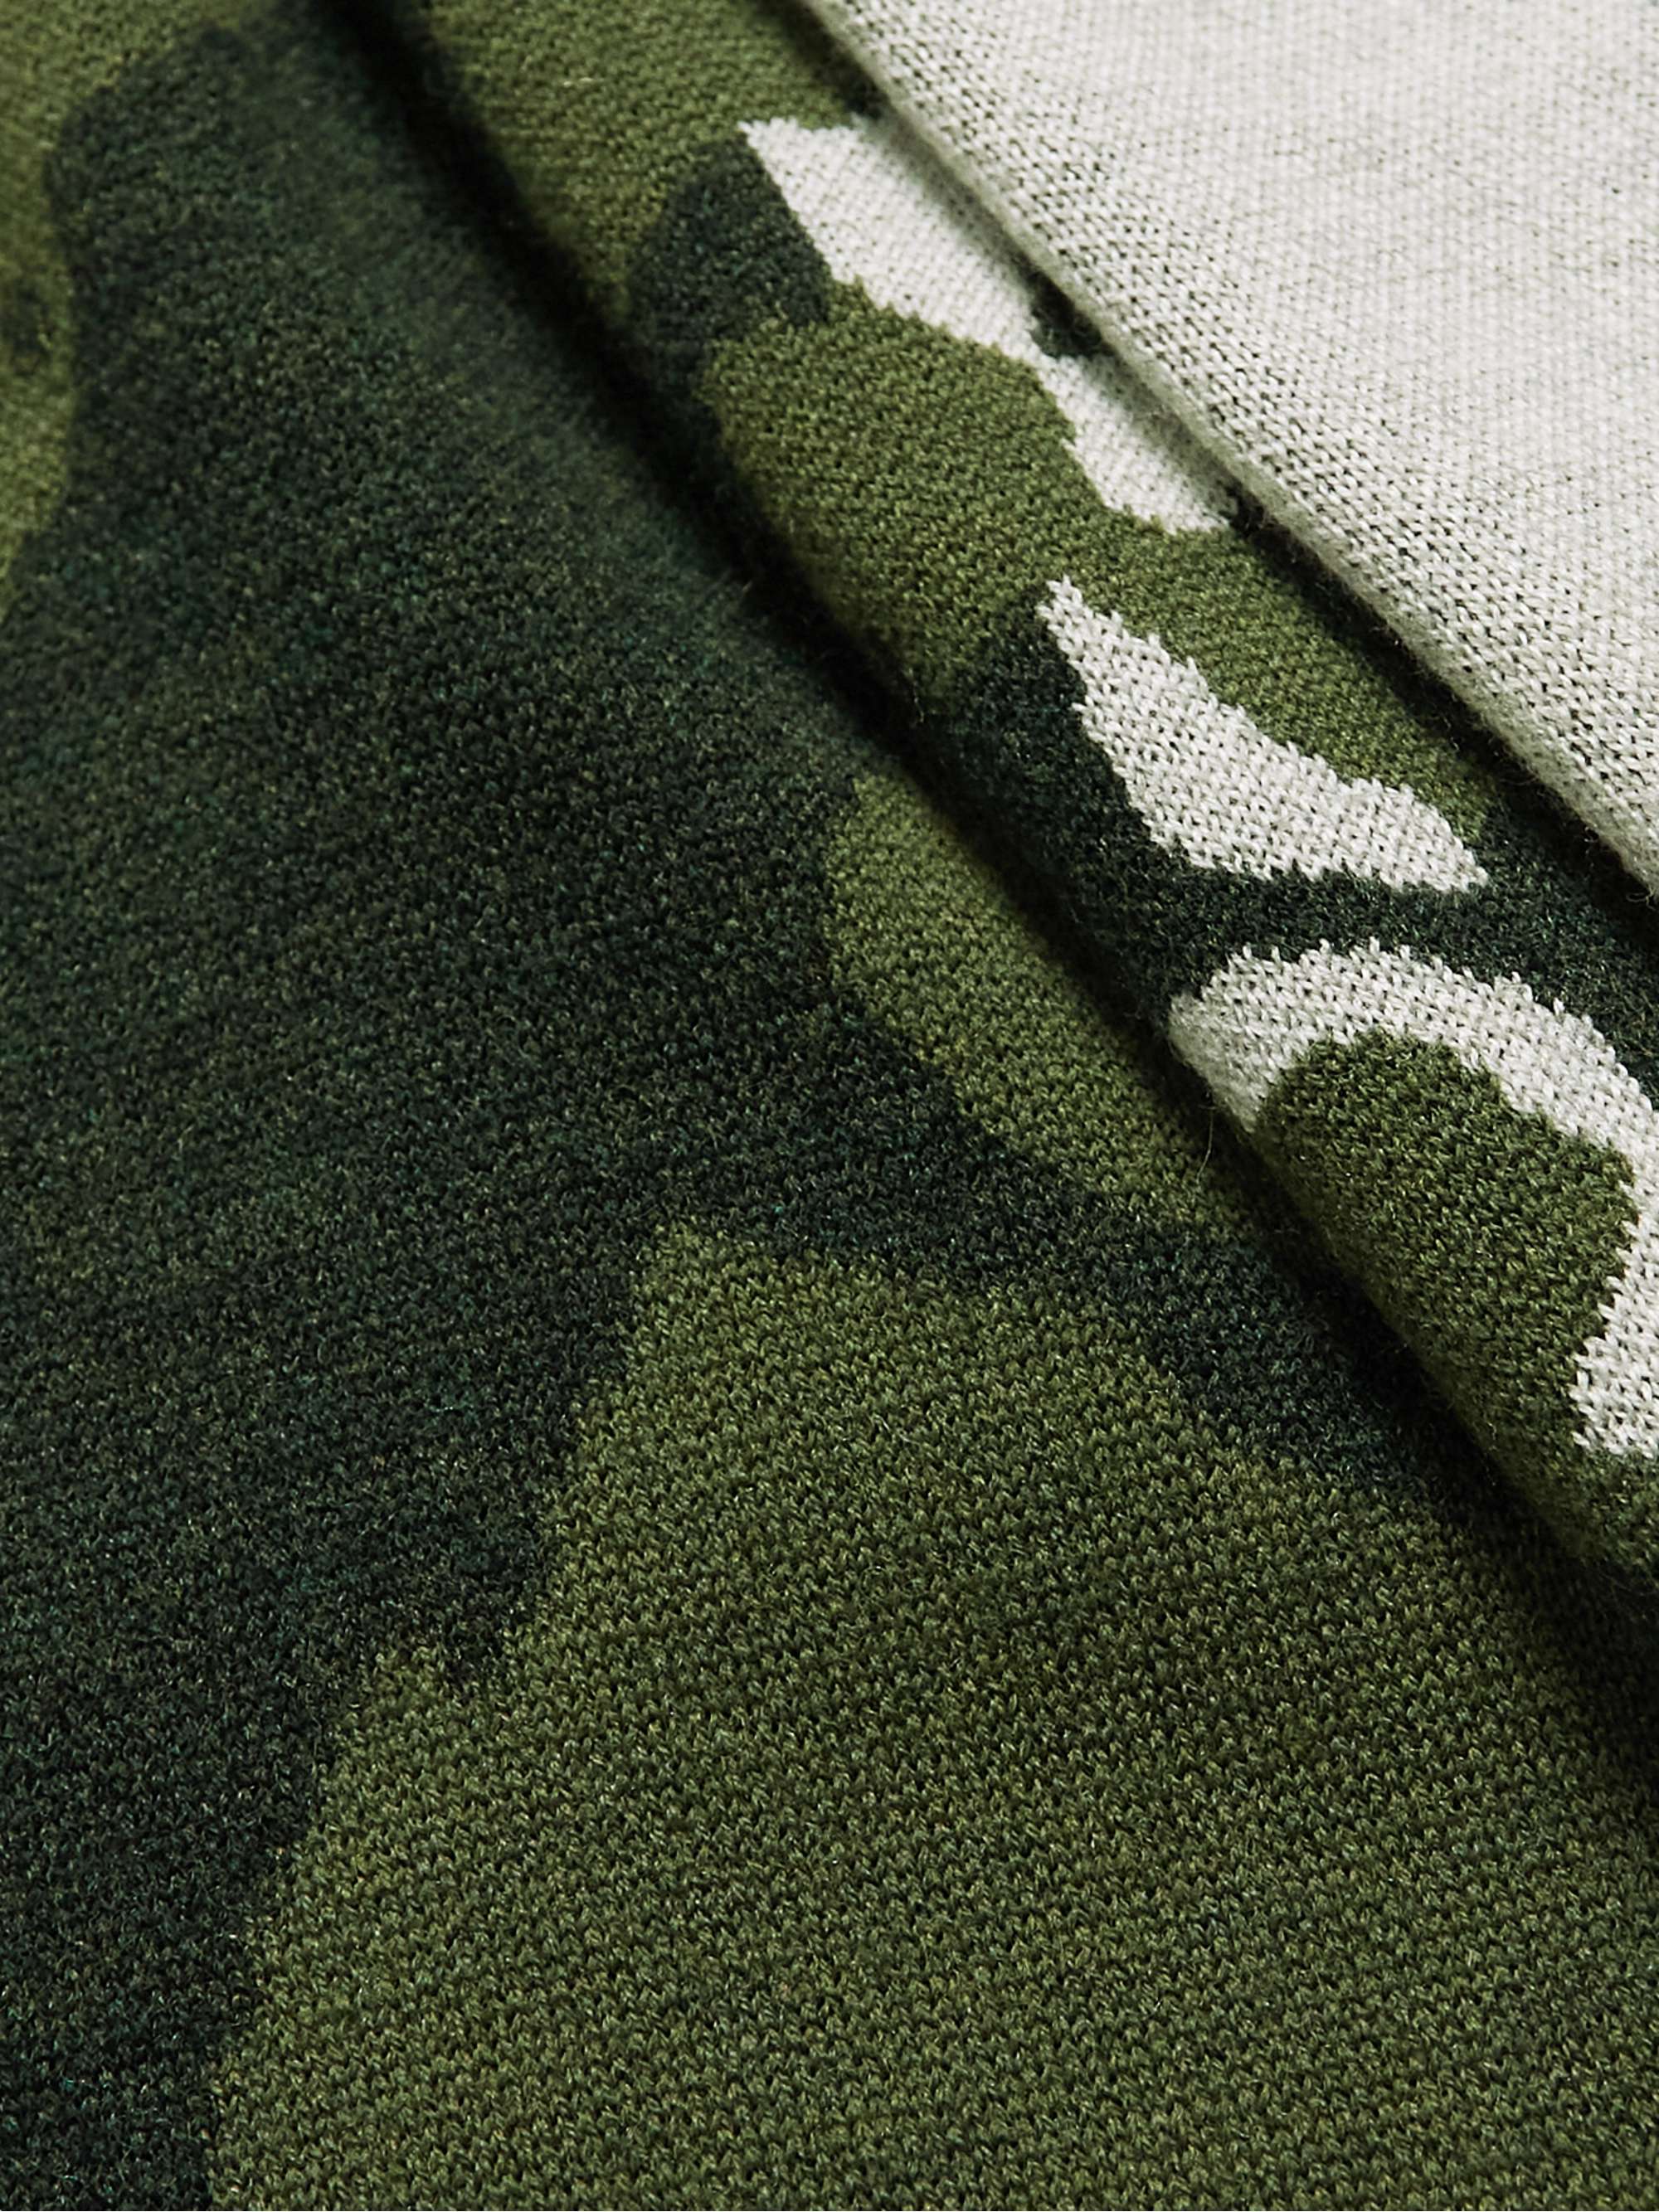 MILES LEON Camouflage-Jacquard Merino Wool Scarf